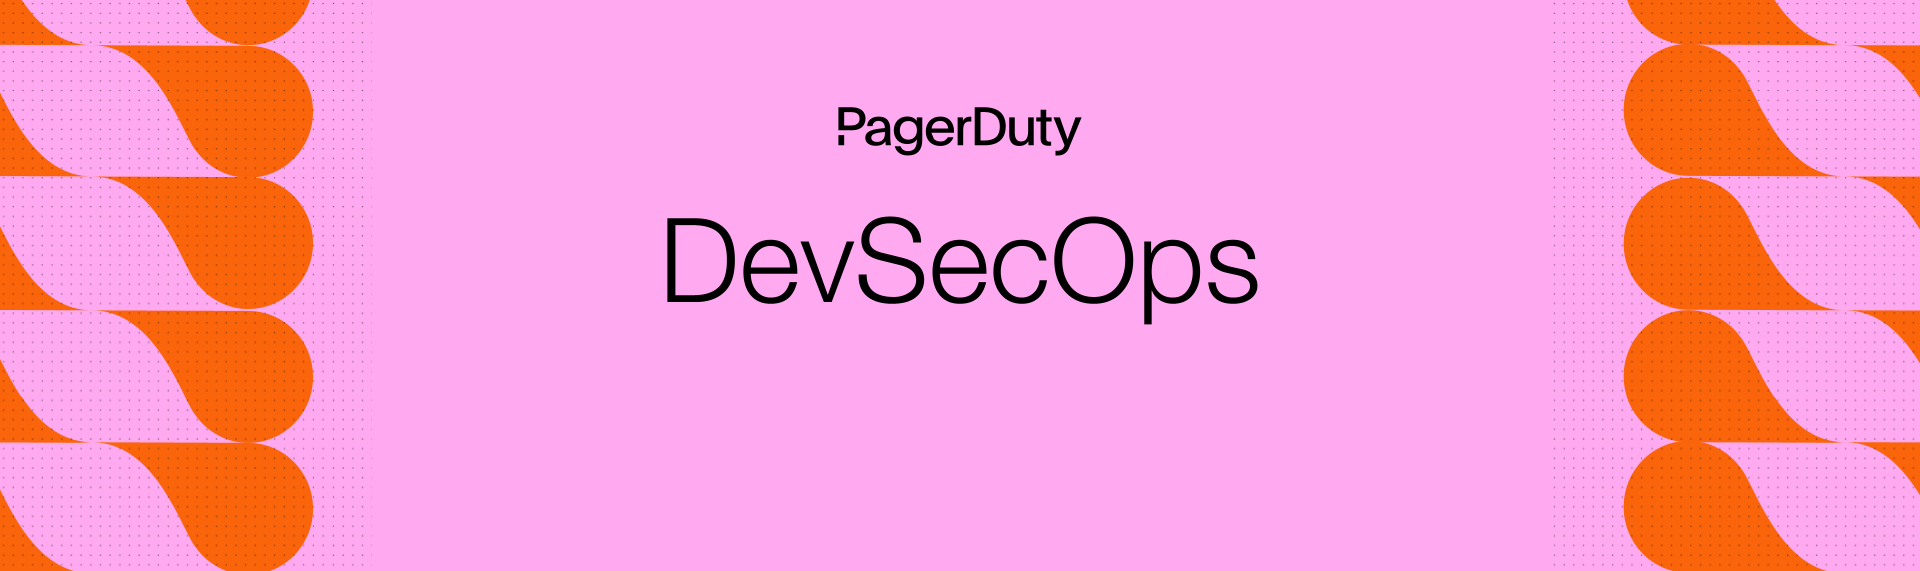 DevSecops指南主页